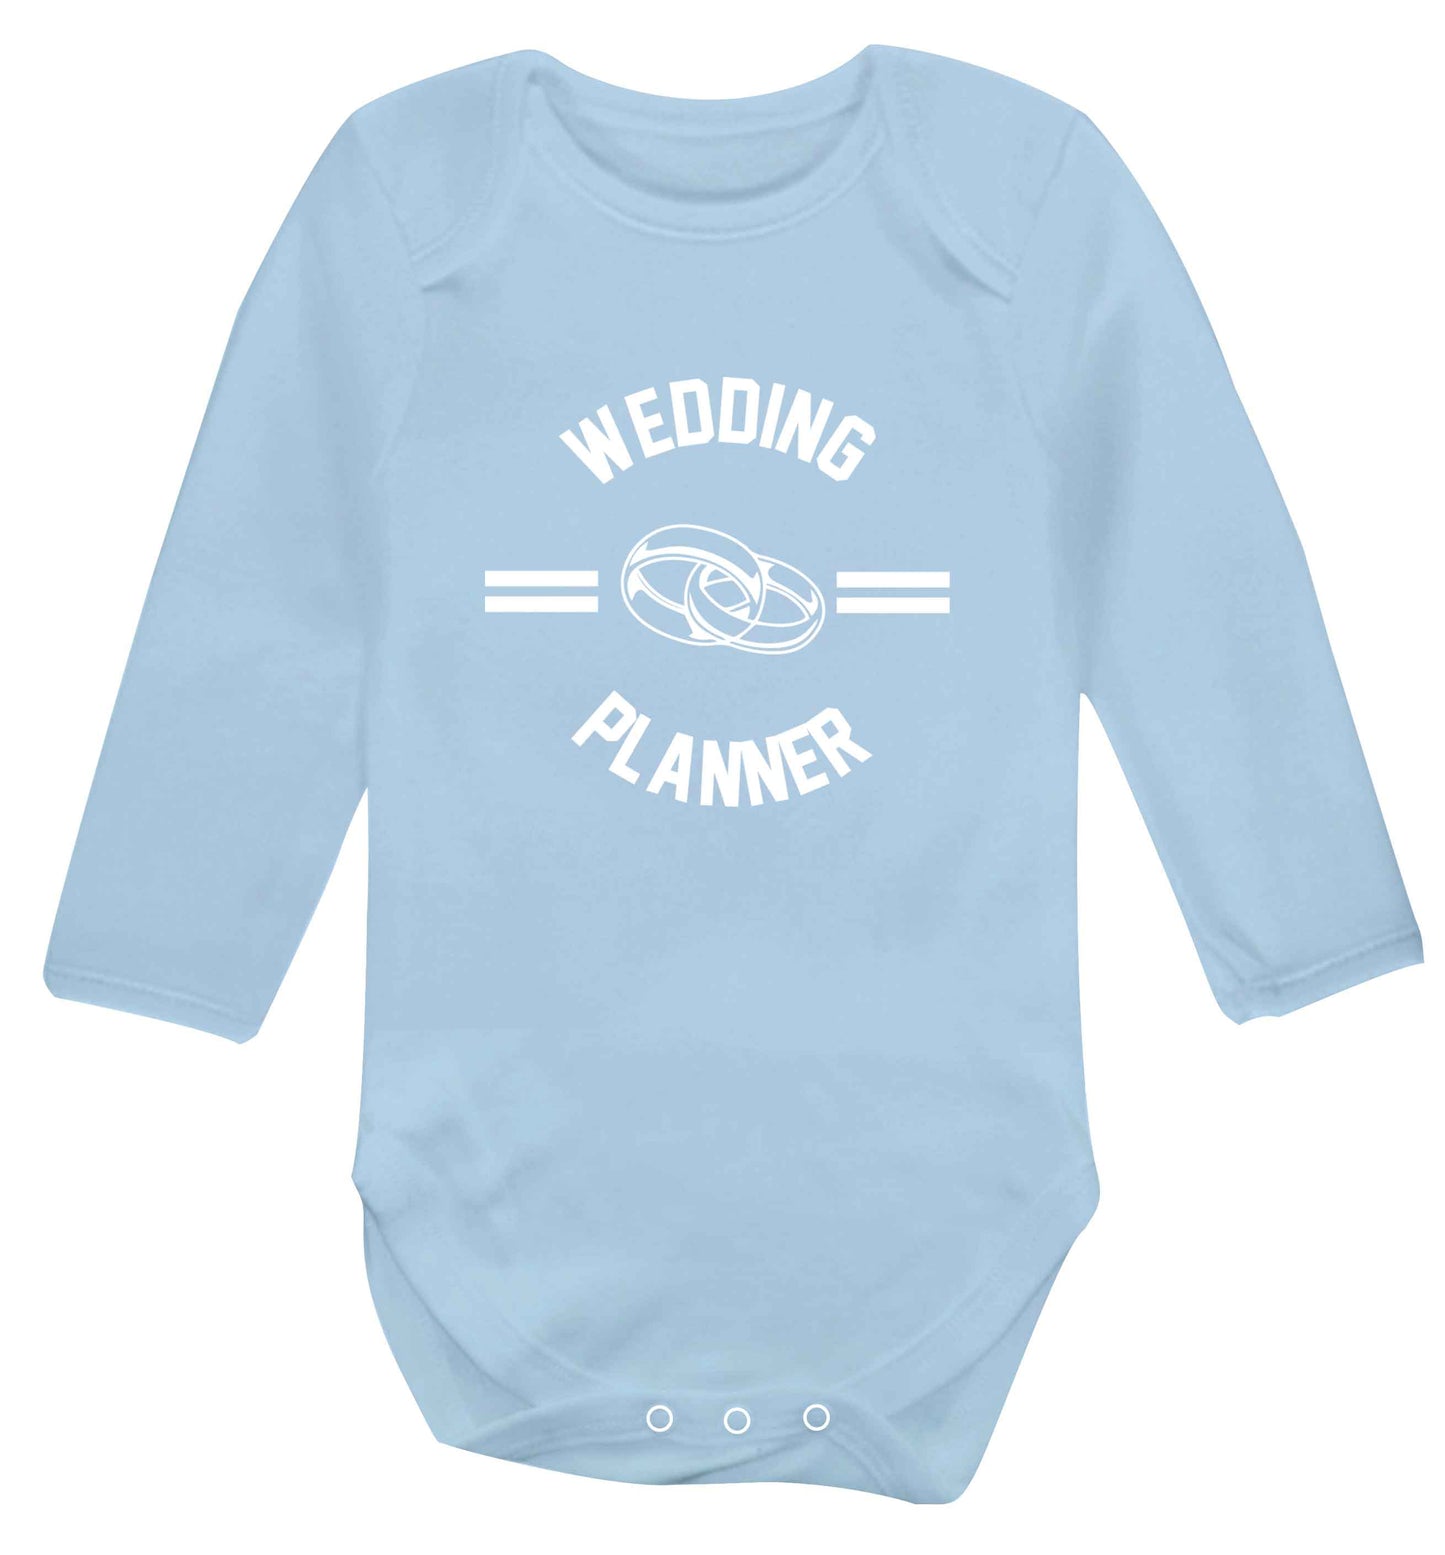 Wedding planner baby vest long sleeved pale blue 6-12 months